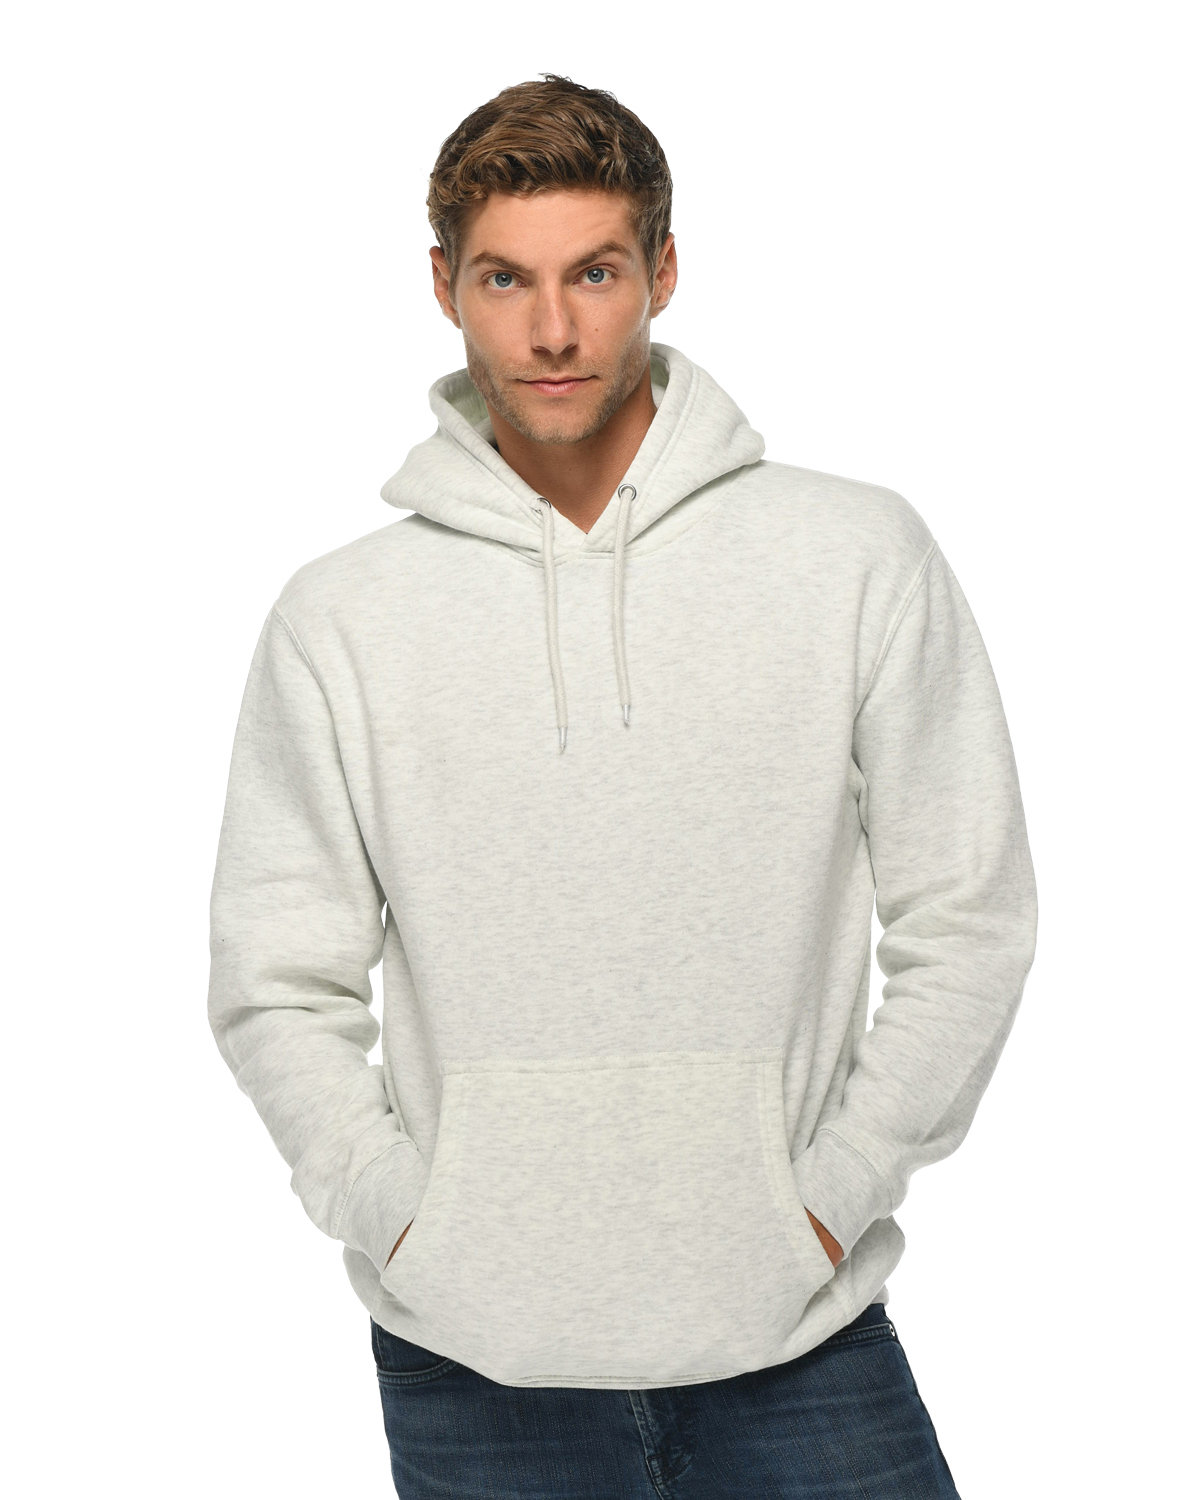 Lane Seven Unisex Premium Pullover Hooded Sweatshirt OATMEAL HEATHER 